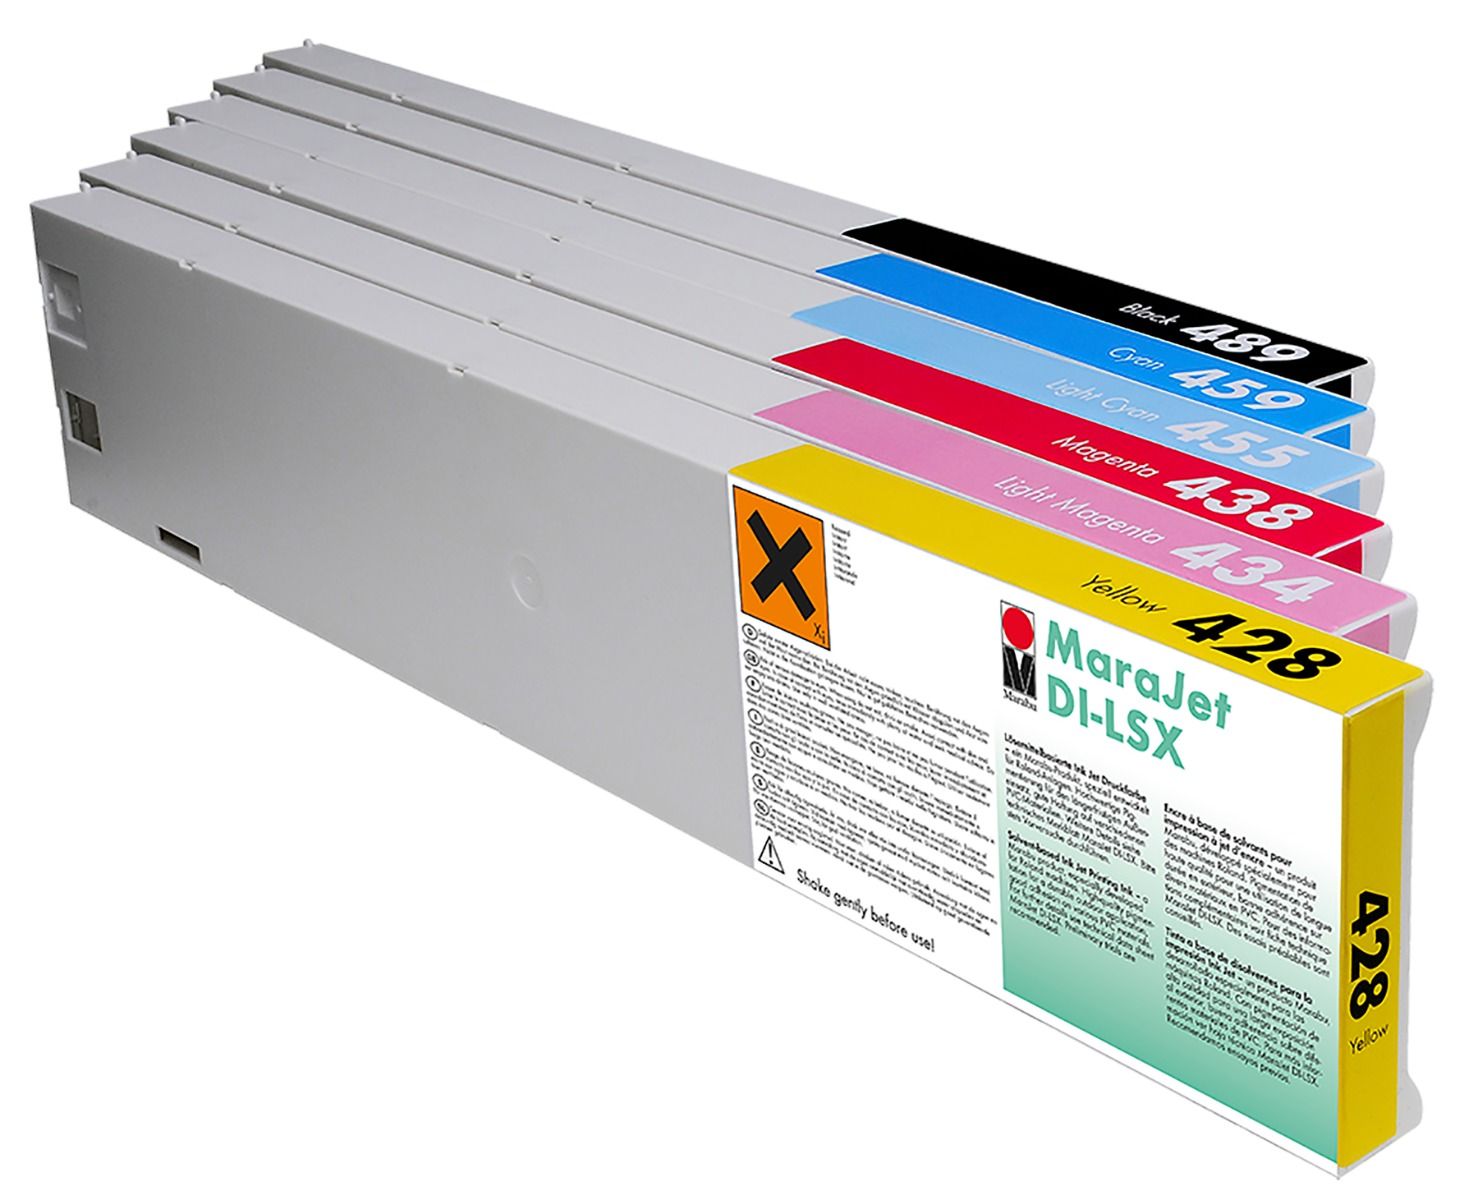 MaraJet DI-LSX Eco-Solvent Ink - 220mL Cartridges